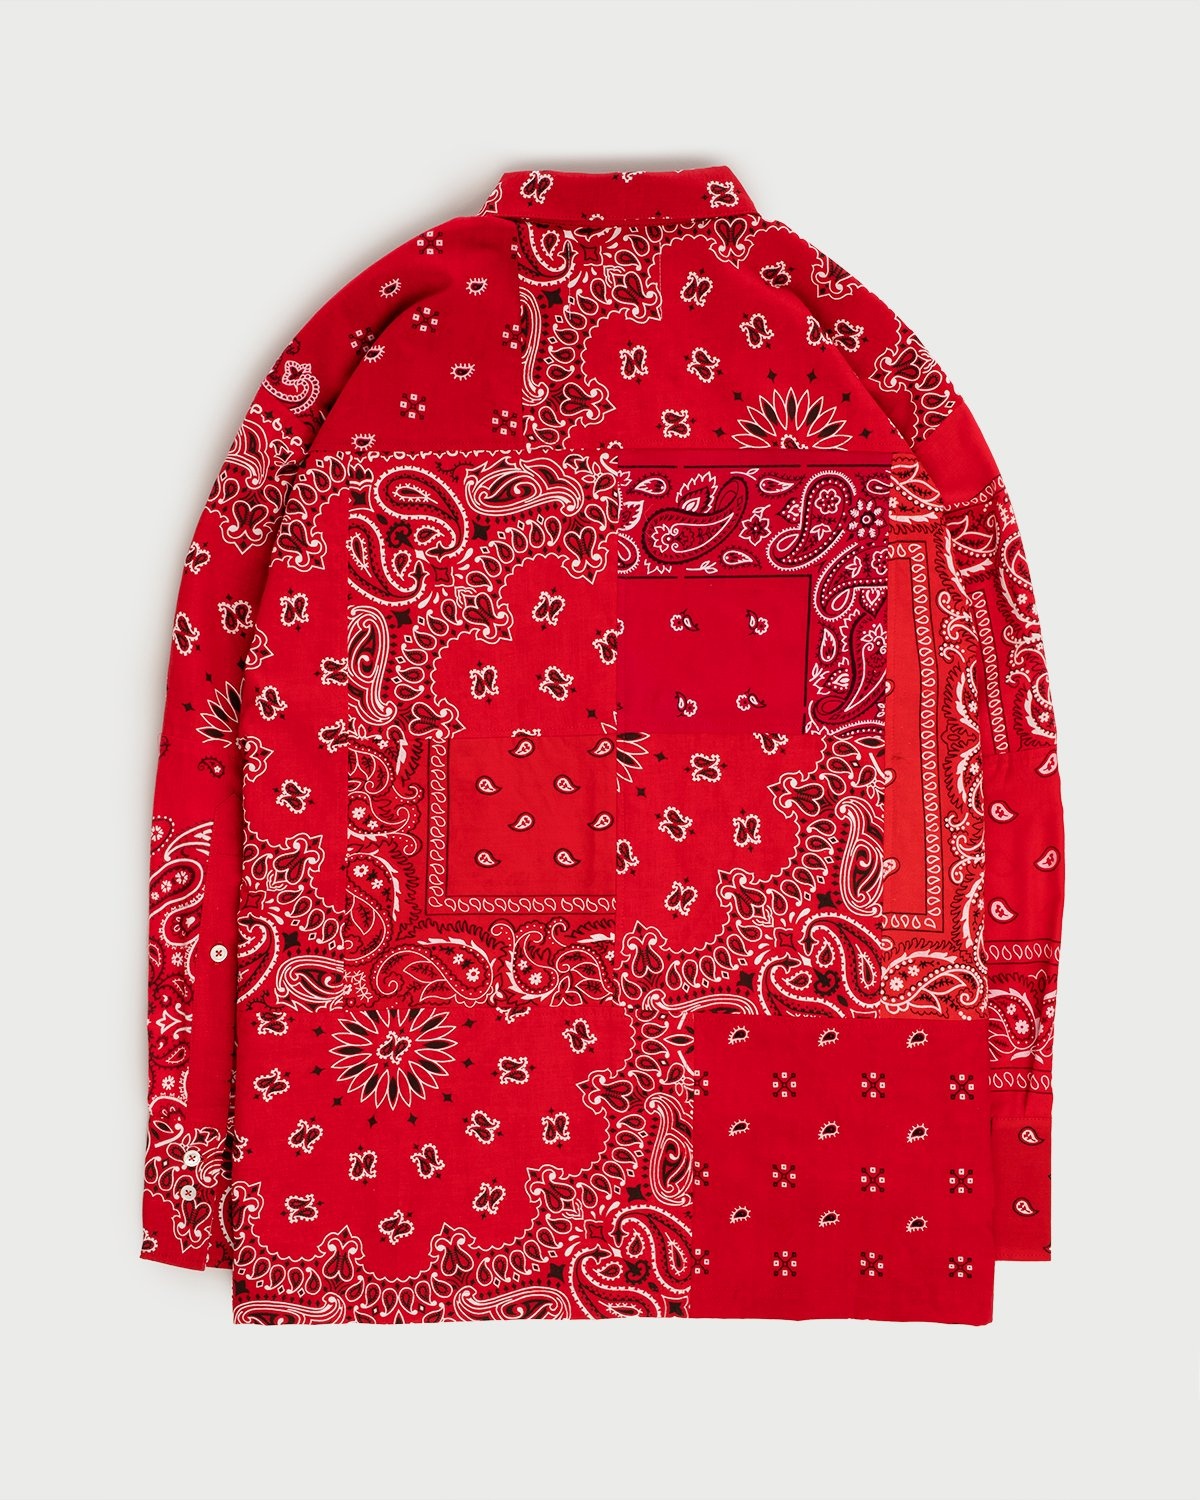 Miyagihidetaka – Bandana Shirt Red - Longsleeve Shirts - Red - Image 3